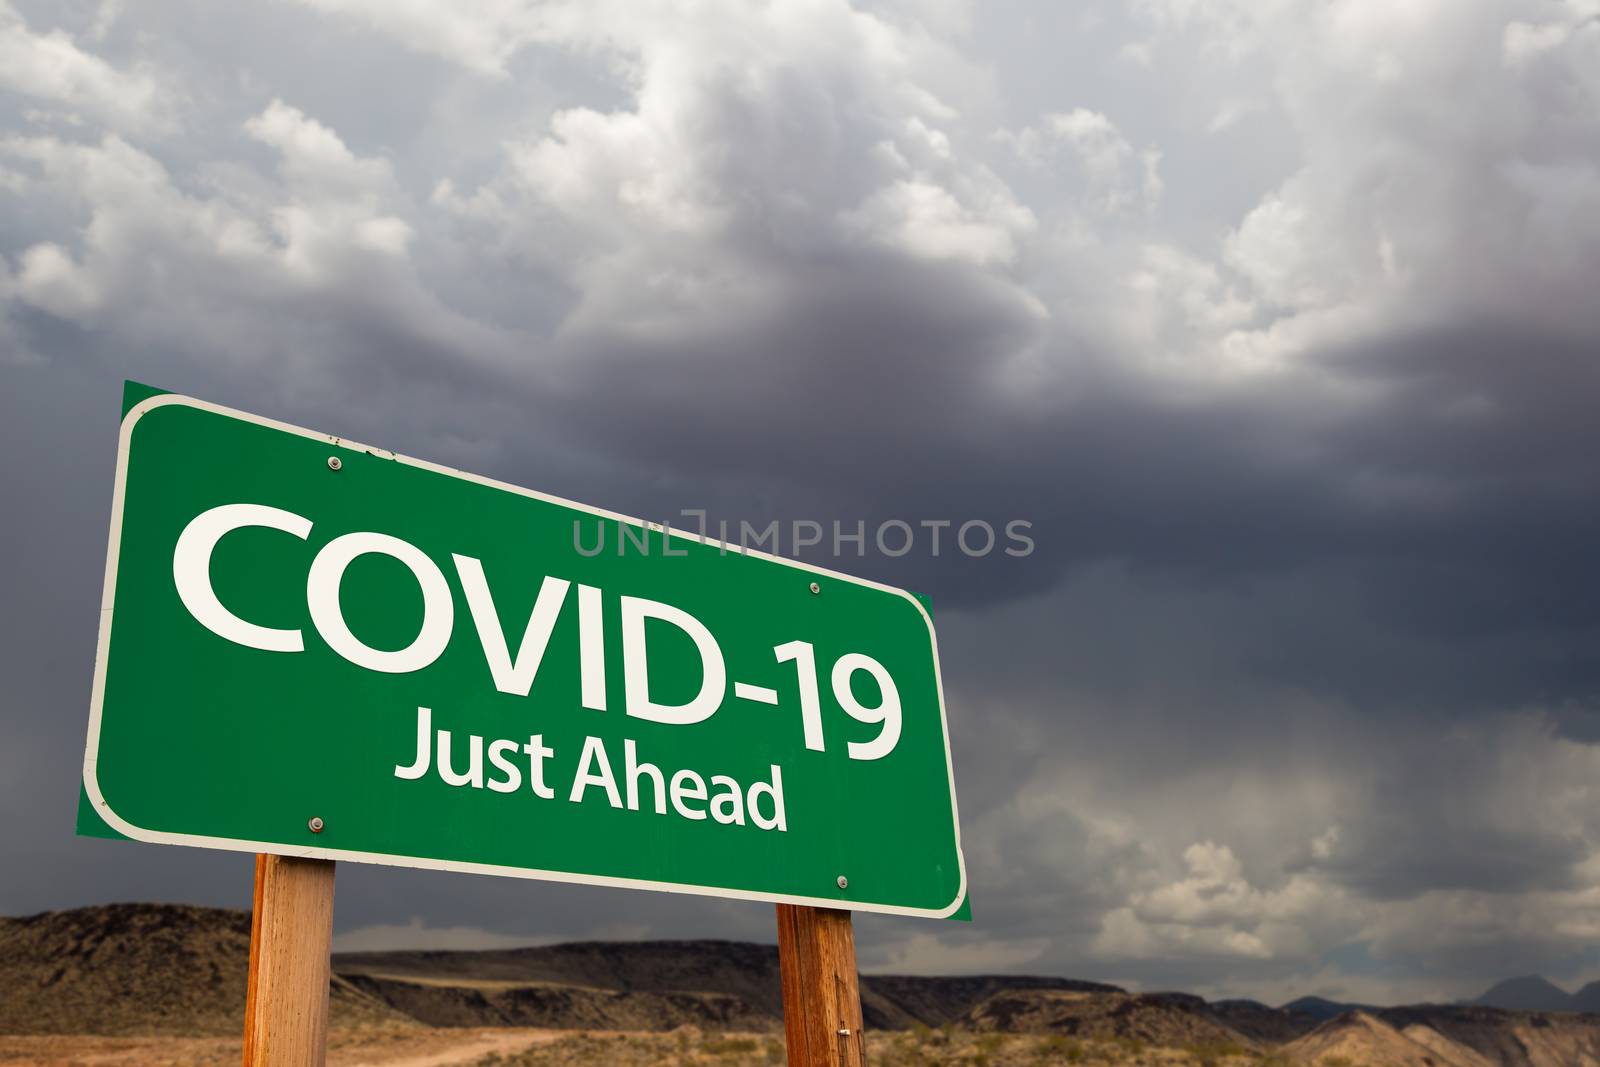 COVID-19 Coronavirus Green Road Sign Against Ominous Stormy Cloudy Sky.